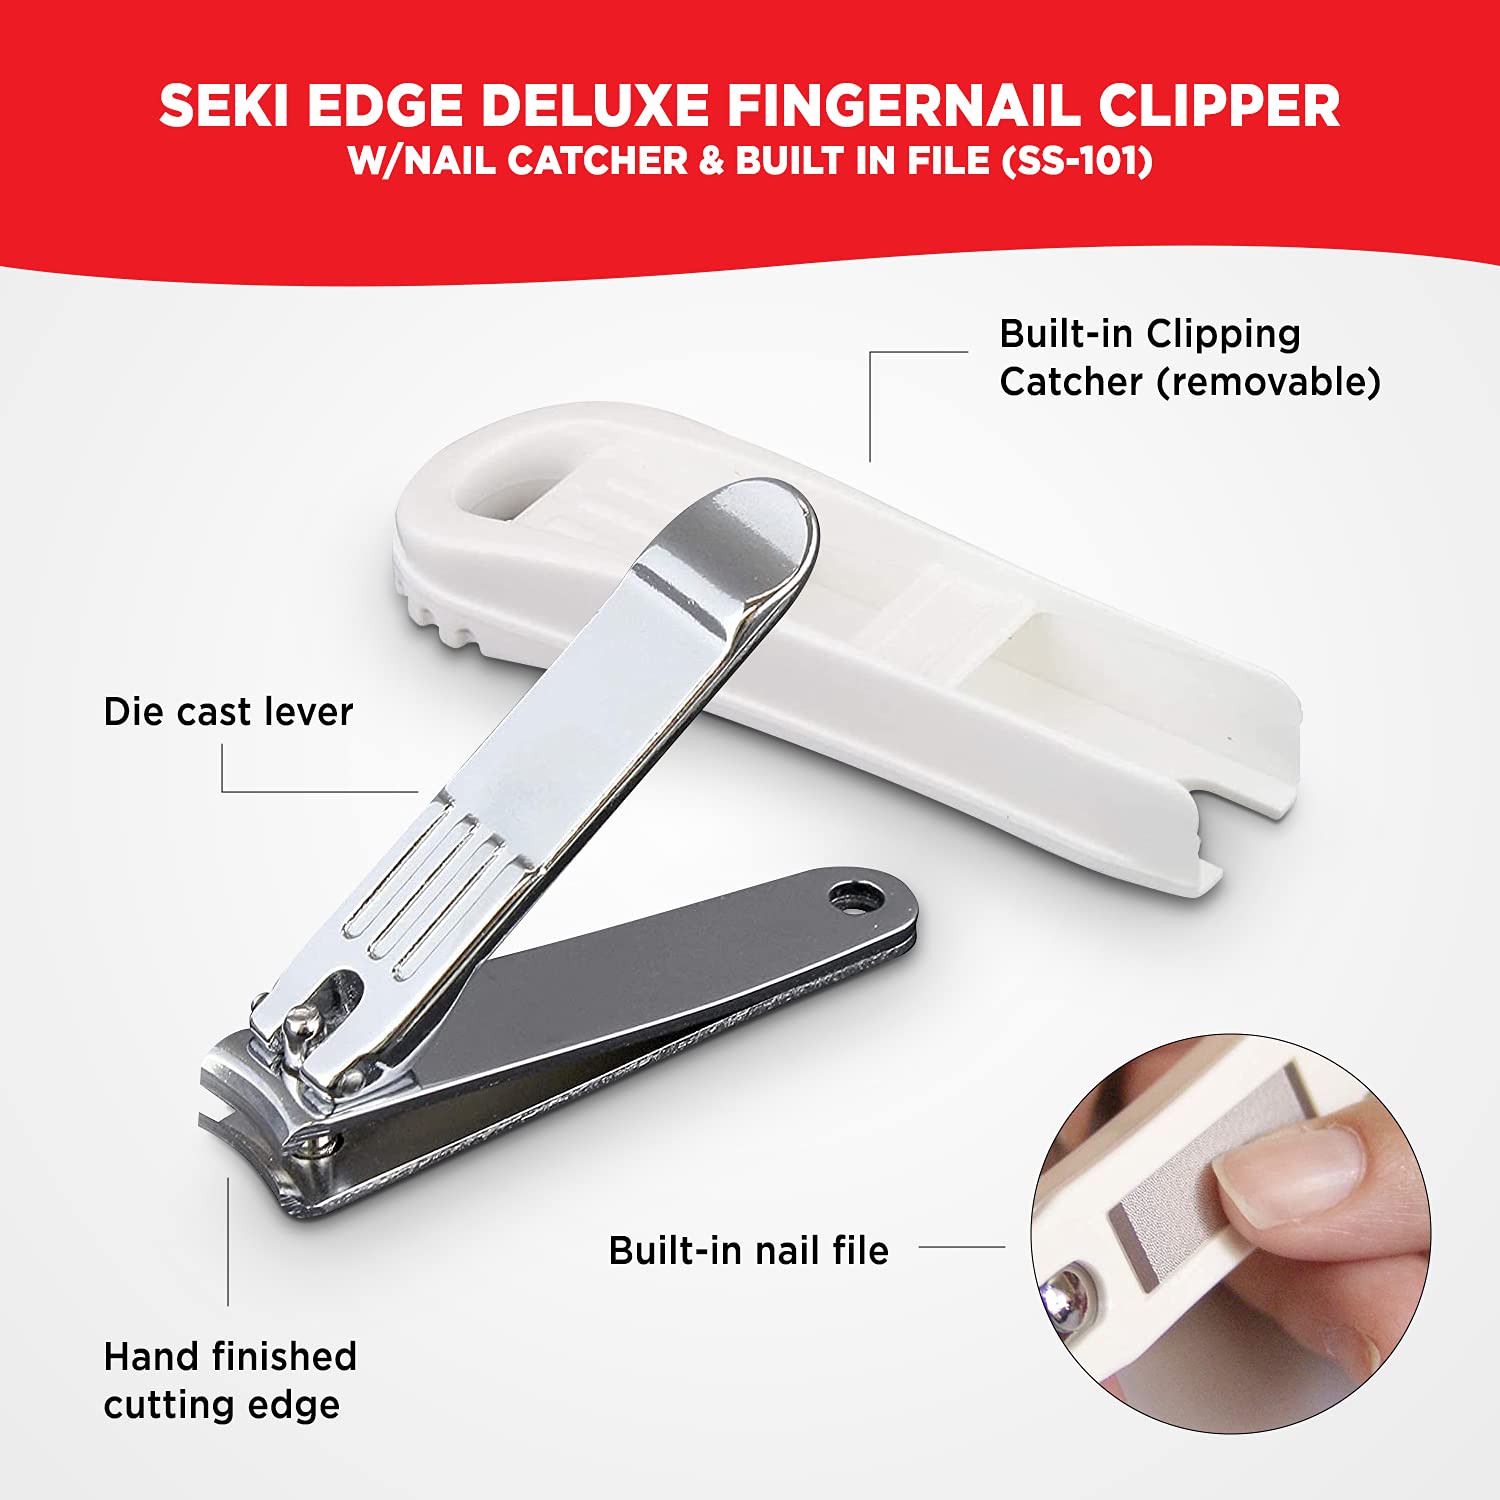 Seki Edge Deluxe Fingernail Clipper w/Nail Catcher & Built in File